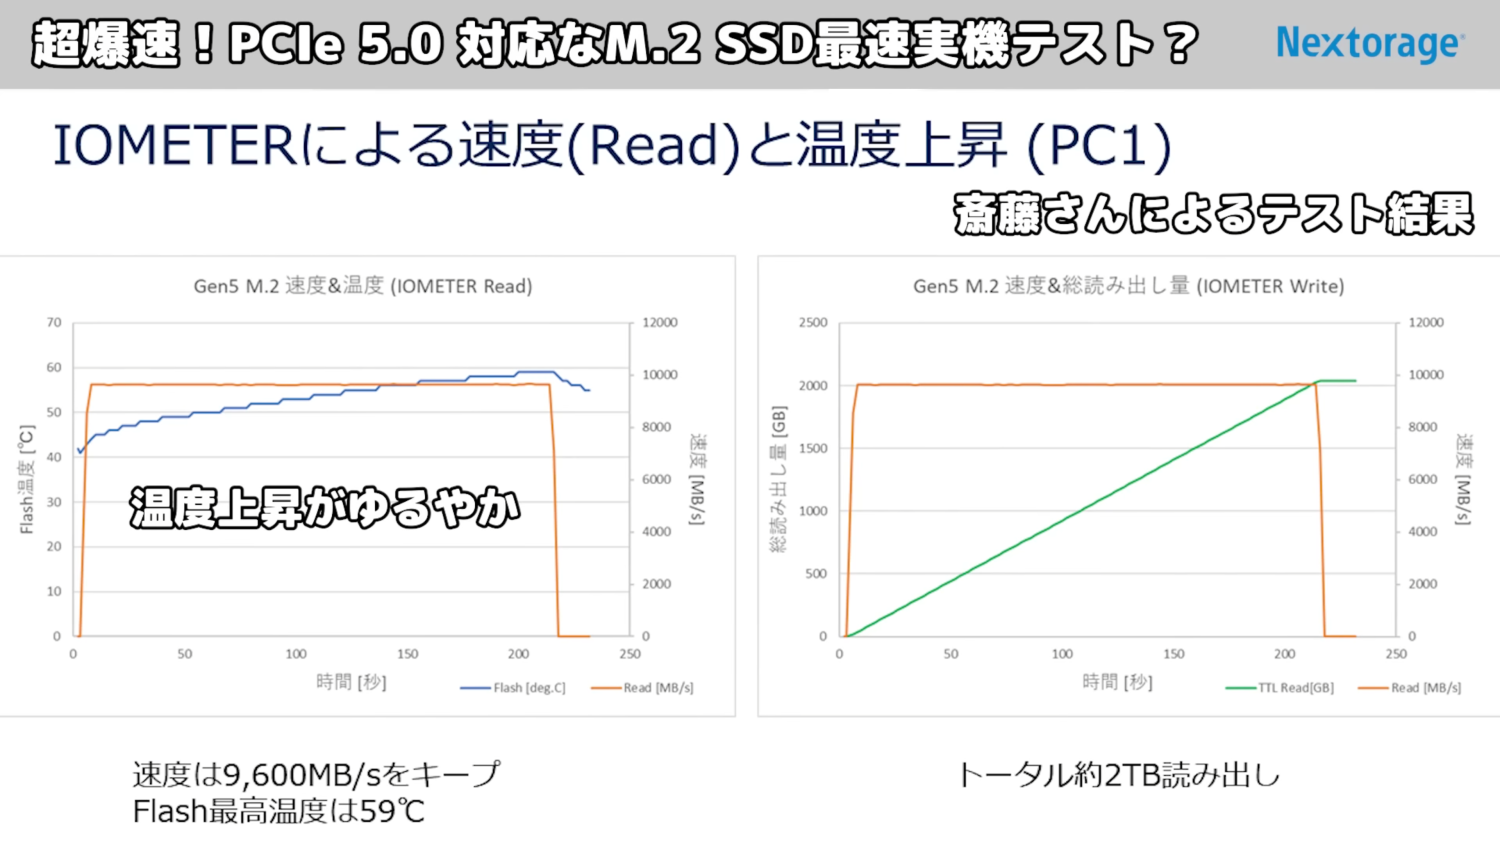 TweakTown Enlarged Image - Nextorage PCIe Gen5 NVMe M.2 SSD with the heatsink (source: Shimizu_OC)